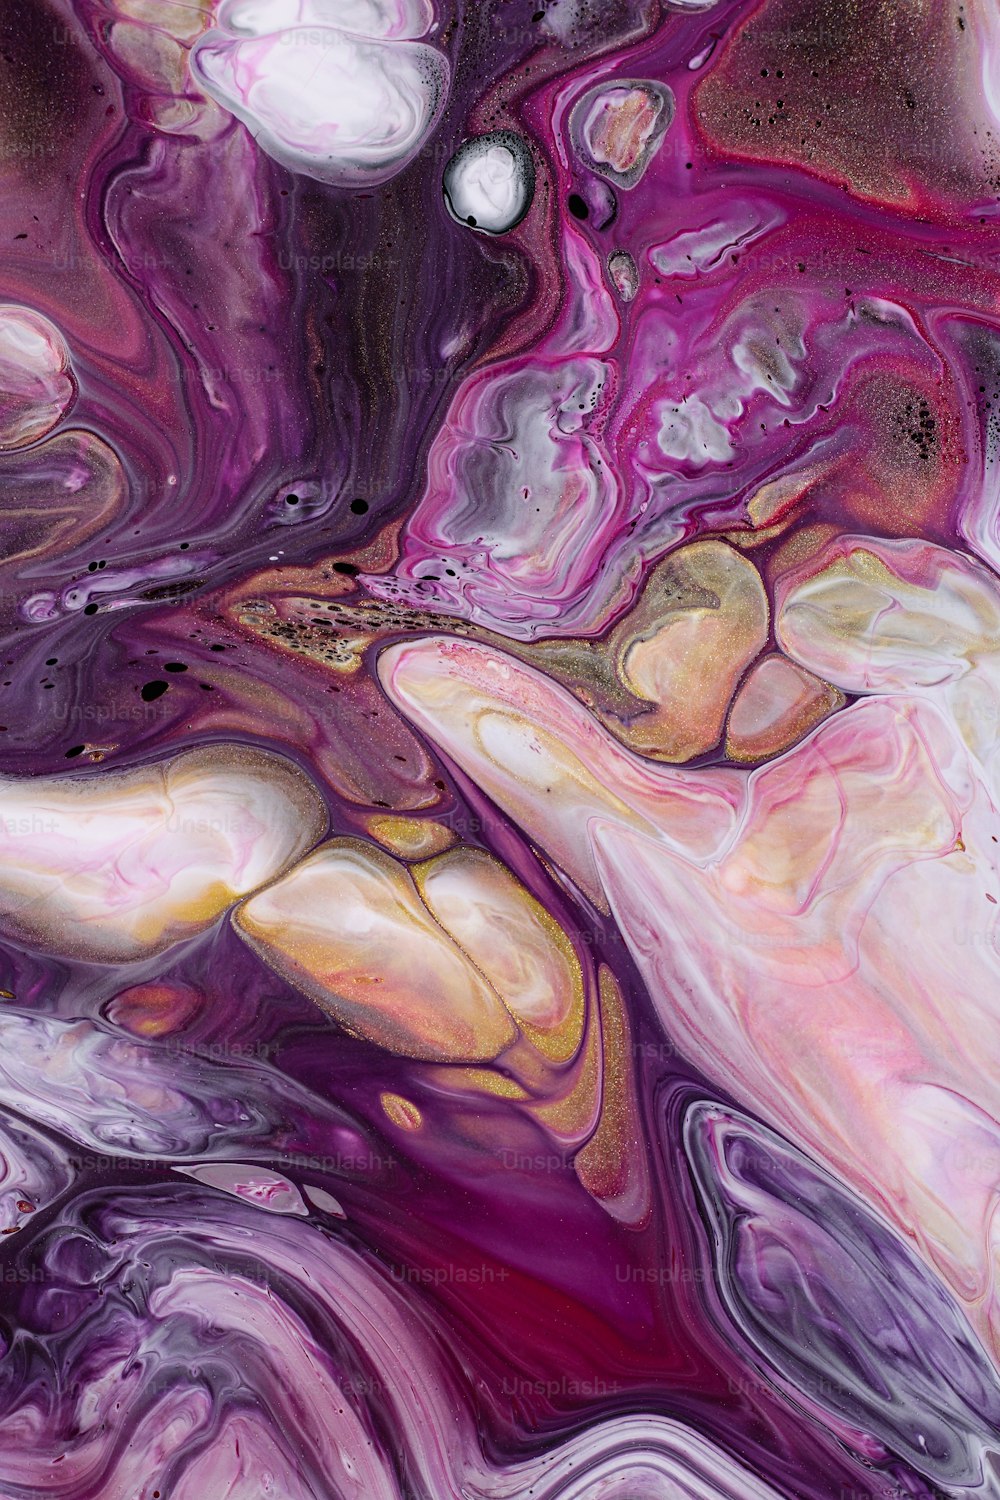 Un dipinto astratto con colori viola e giallo